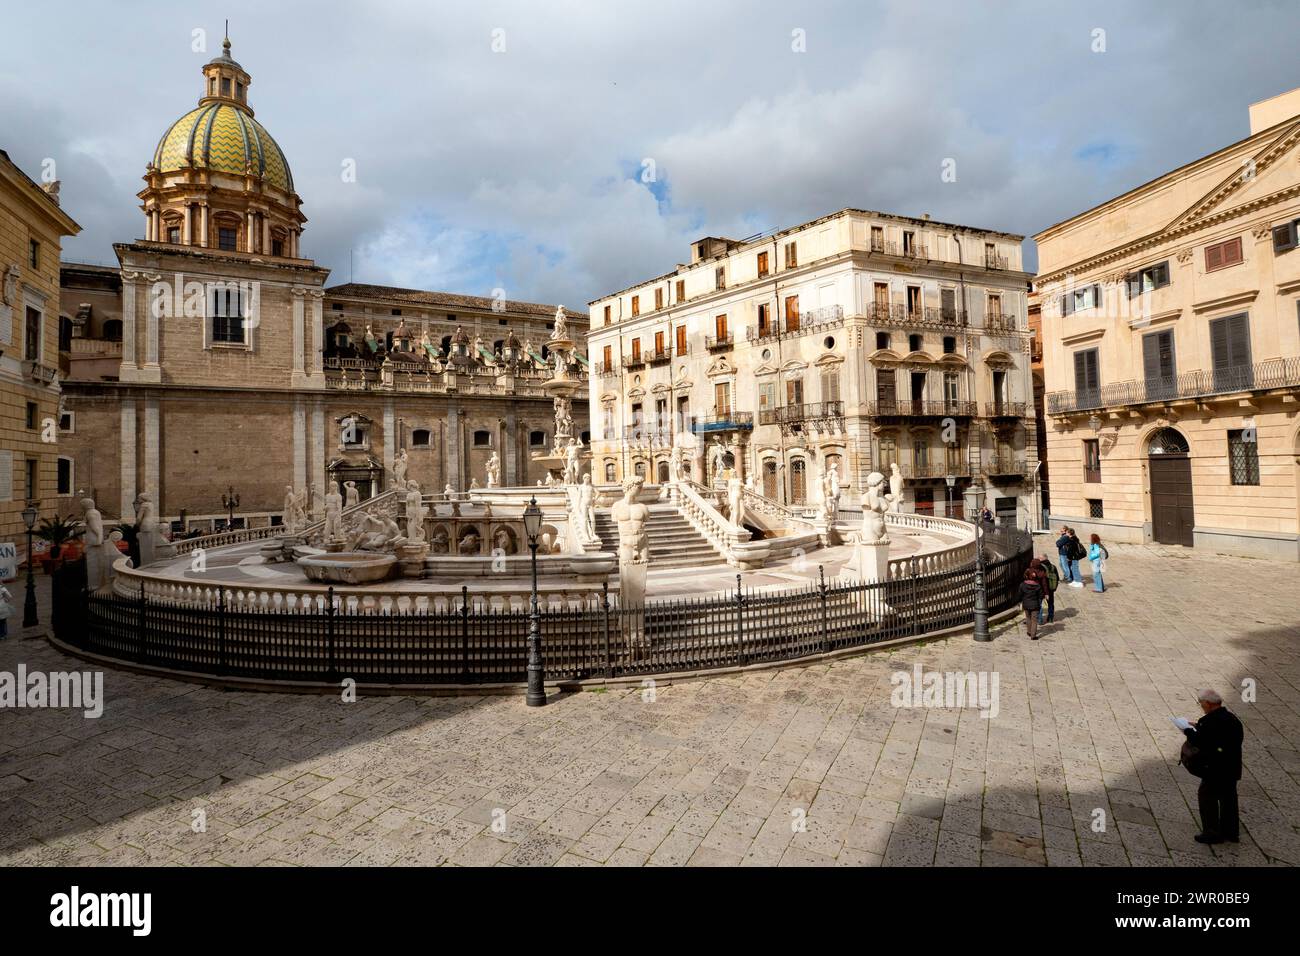 Fontana Pretoria in the city of Palermo on the italian island of Sicily Stock Photo